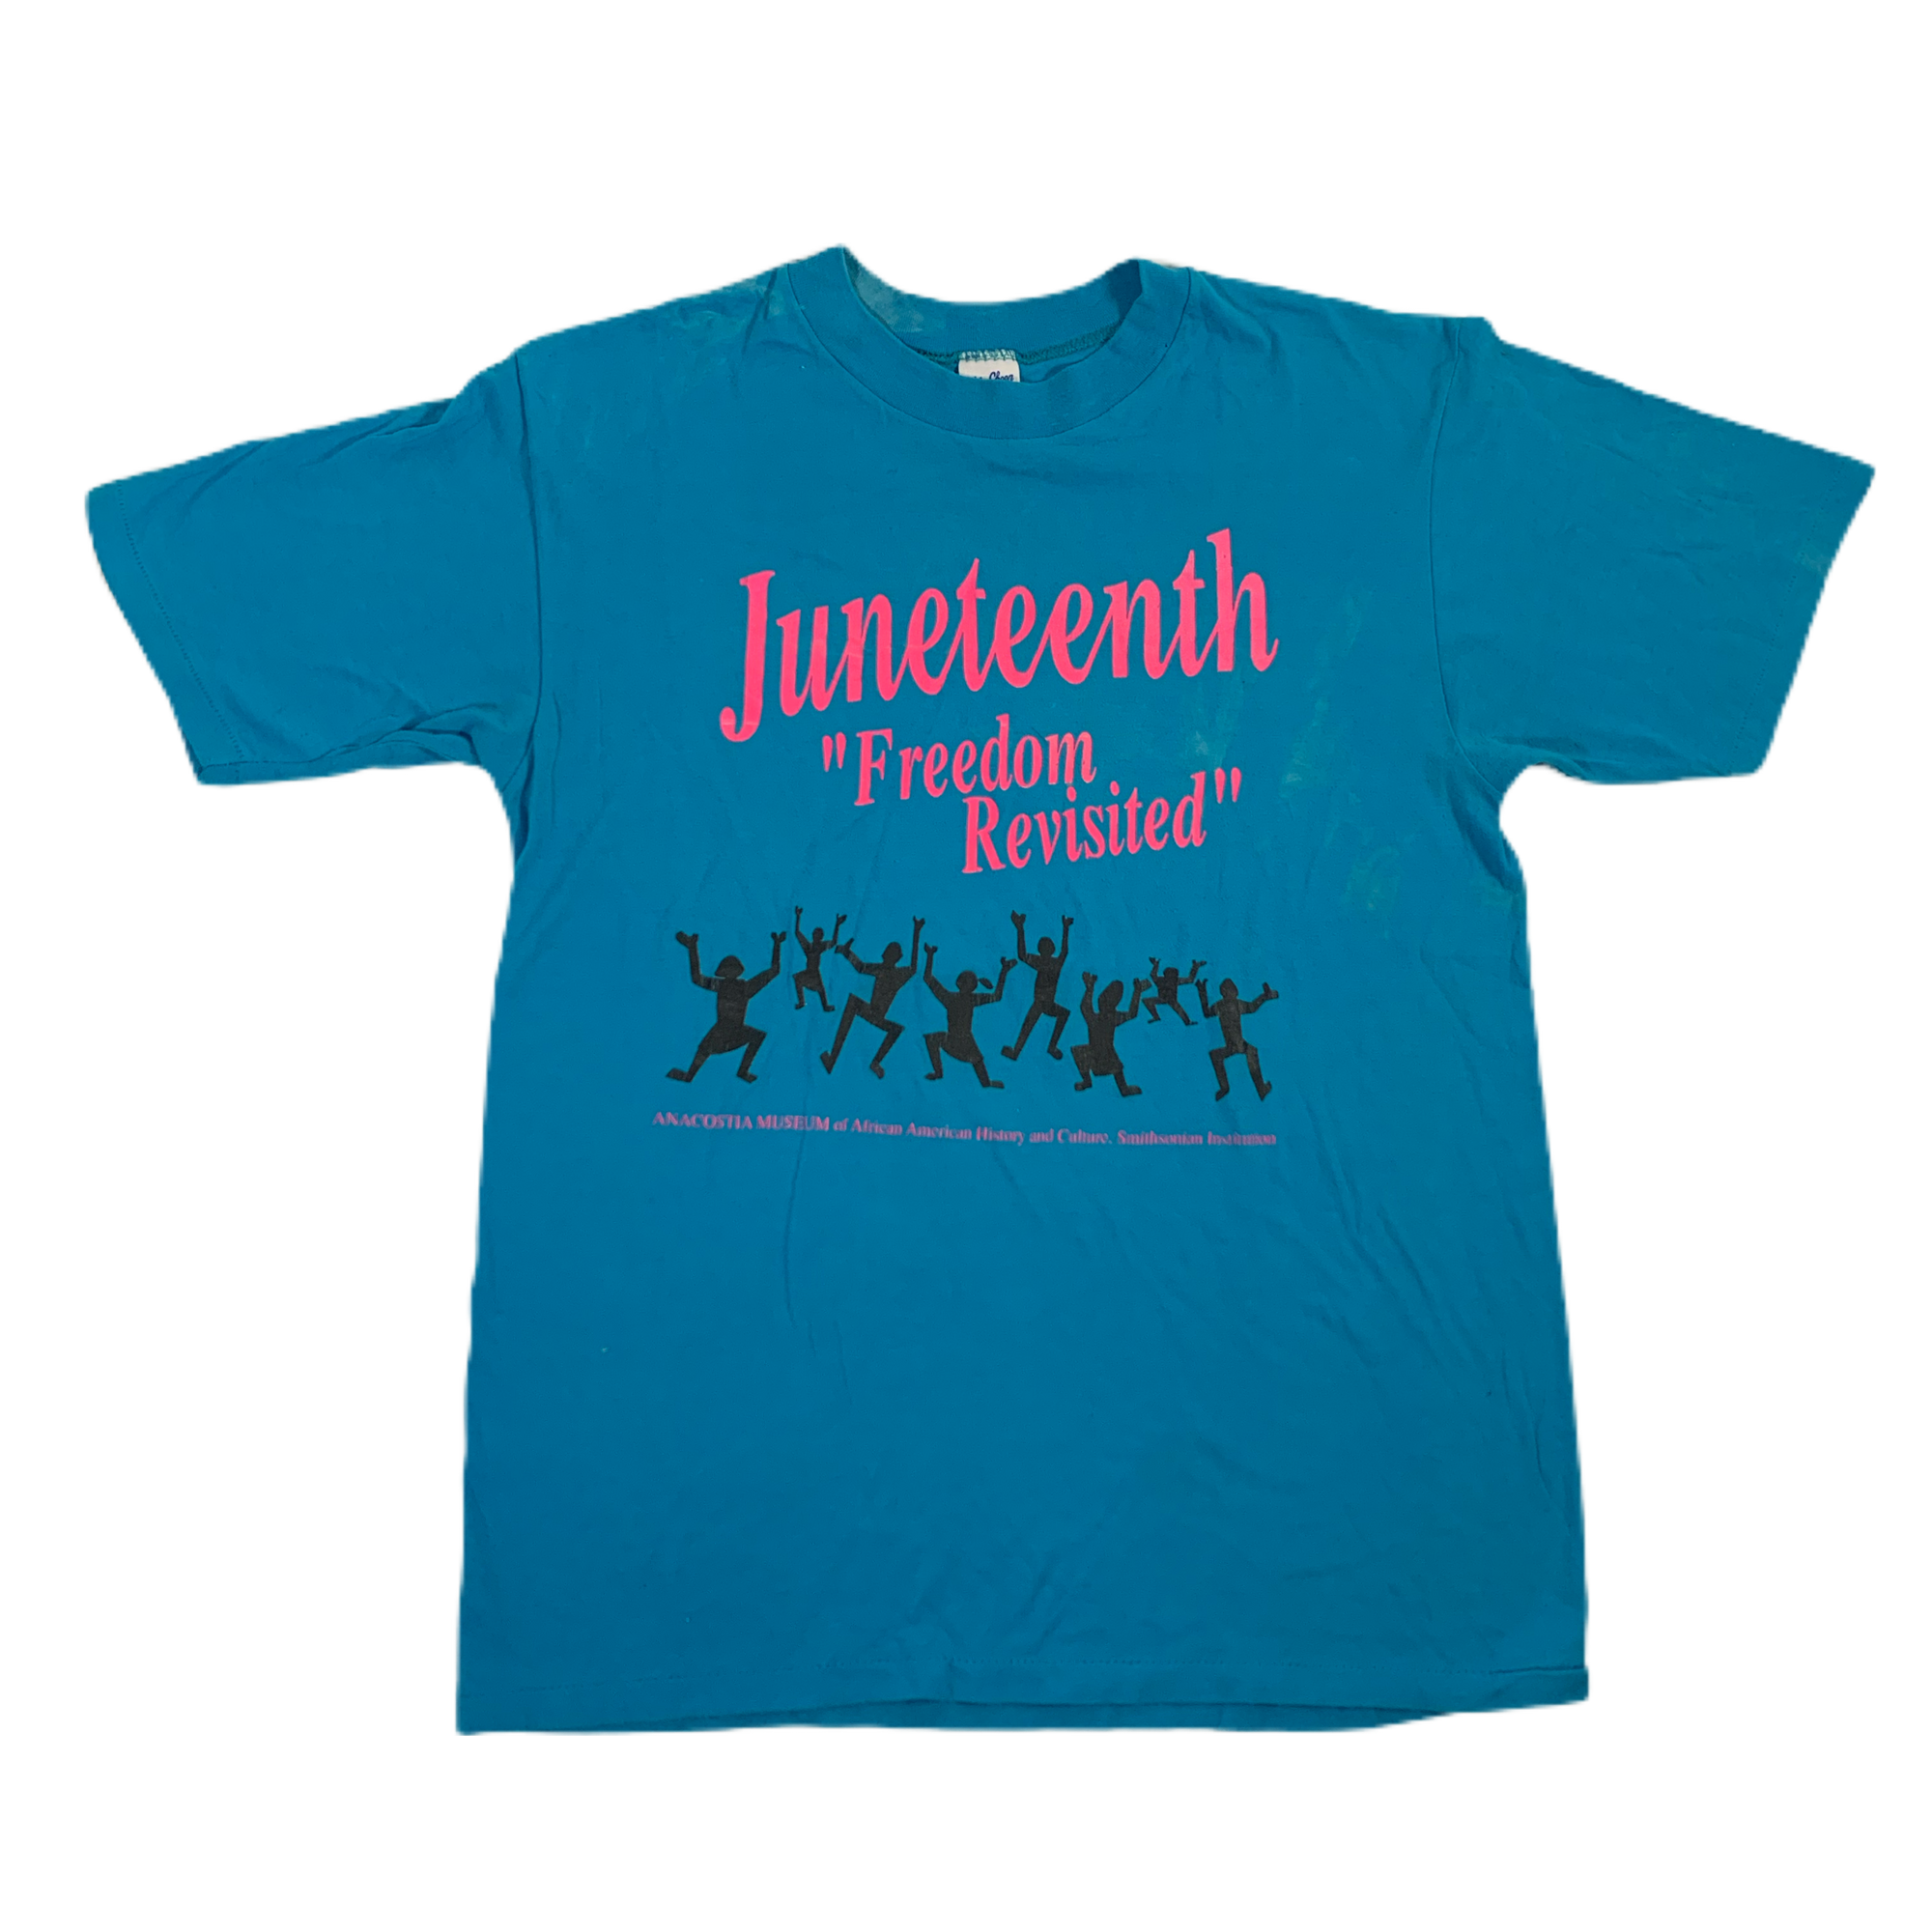 Vintage Juneteenth “Freedom Revisited” T-Shirt - jointcustodydc